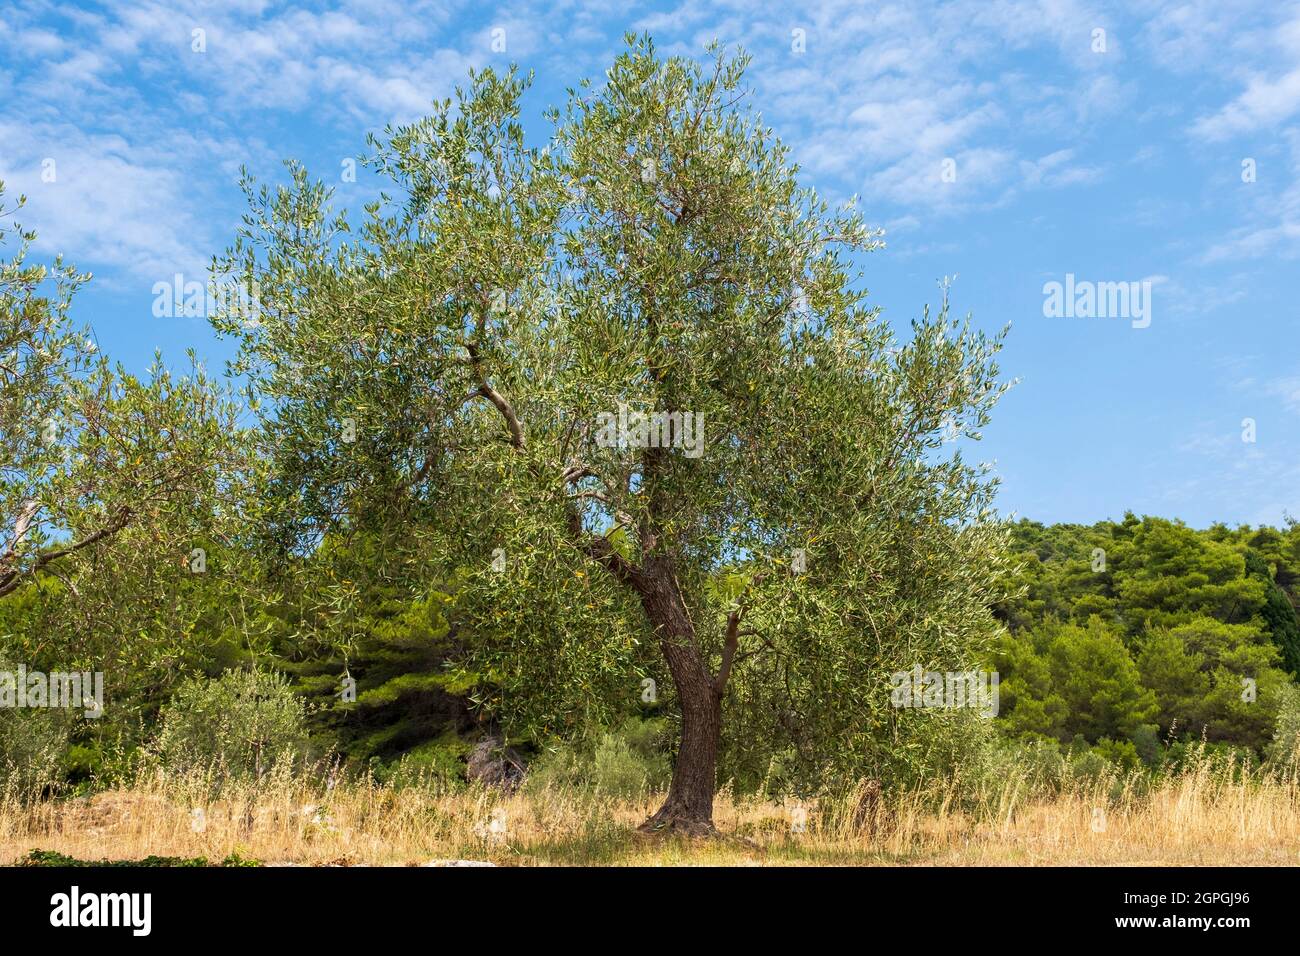 Croatia, Dalmatia, Elaphite Islands, Sipan Island, olive tree Stock Photo